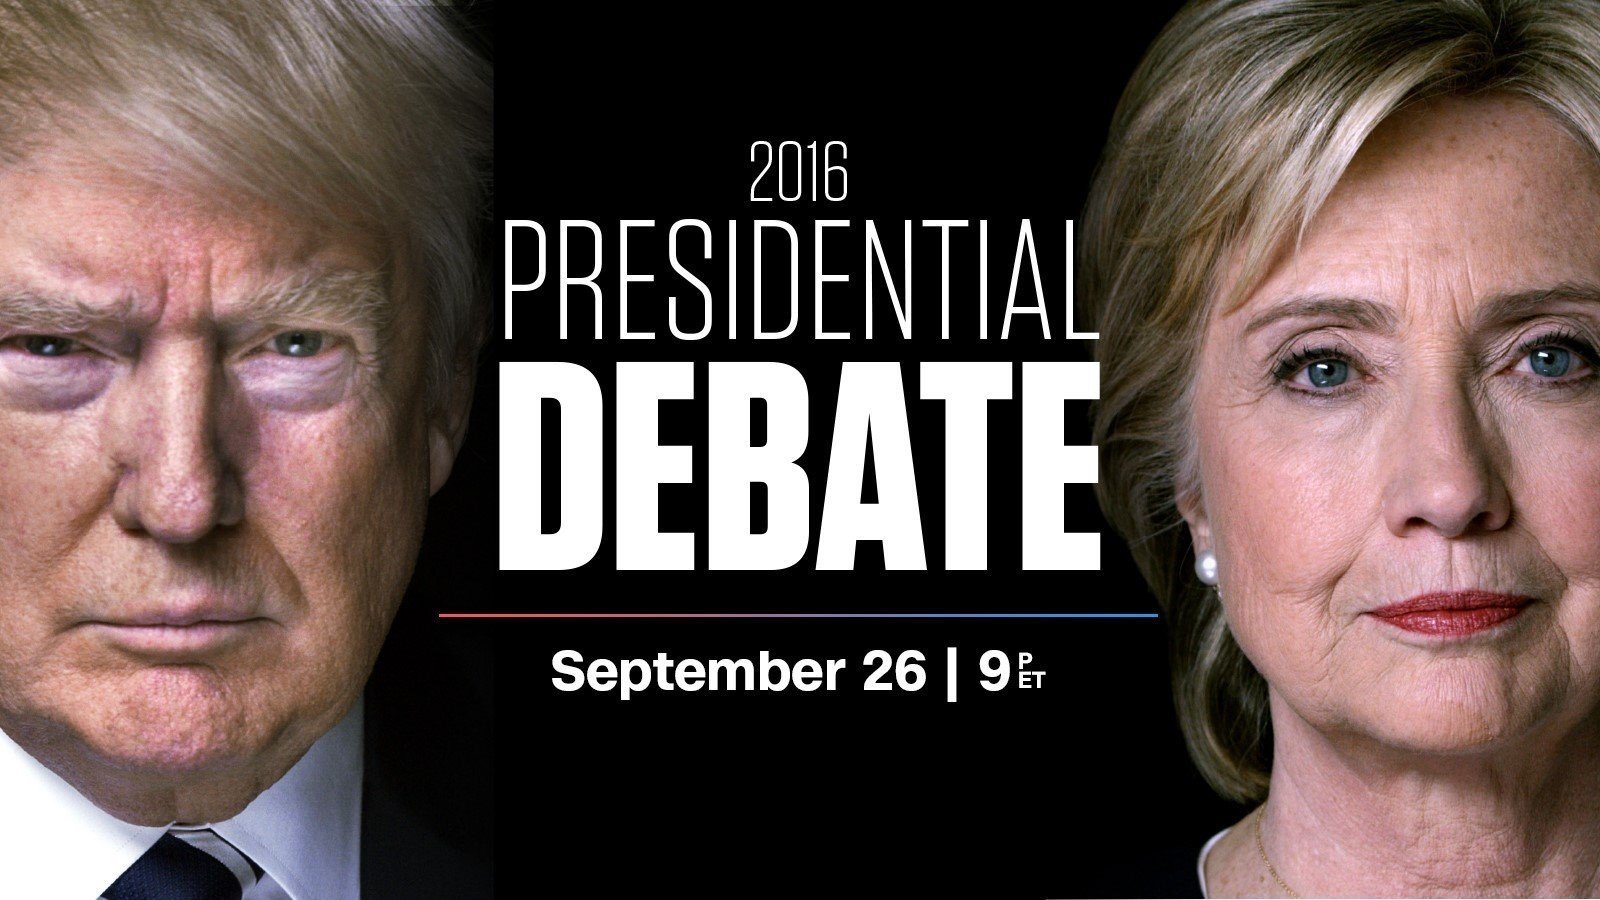 The first presidential debate